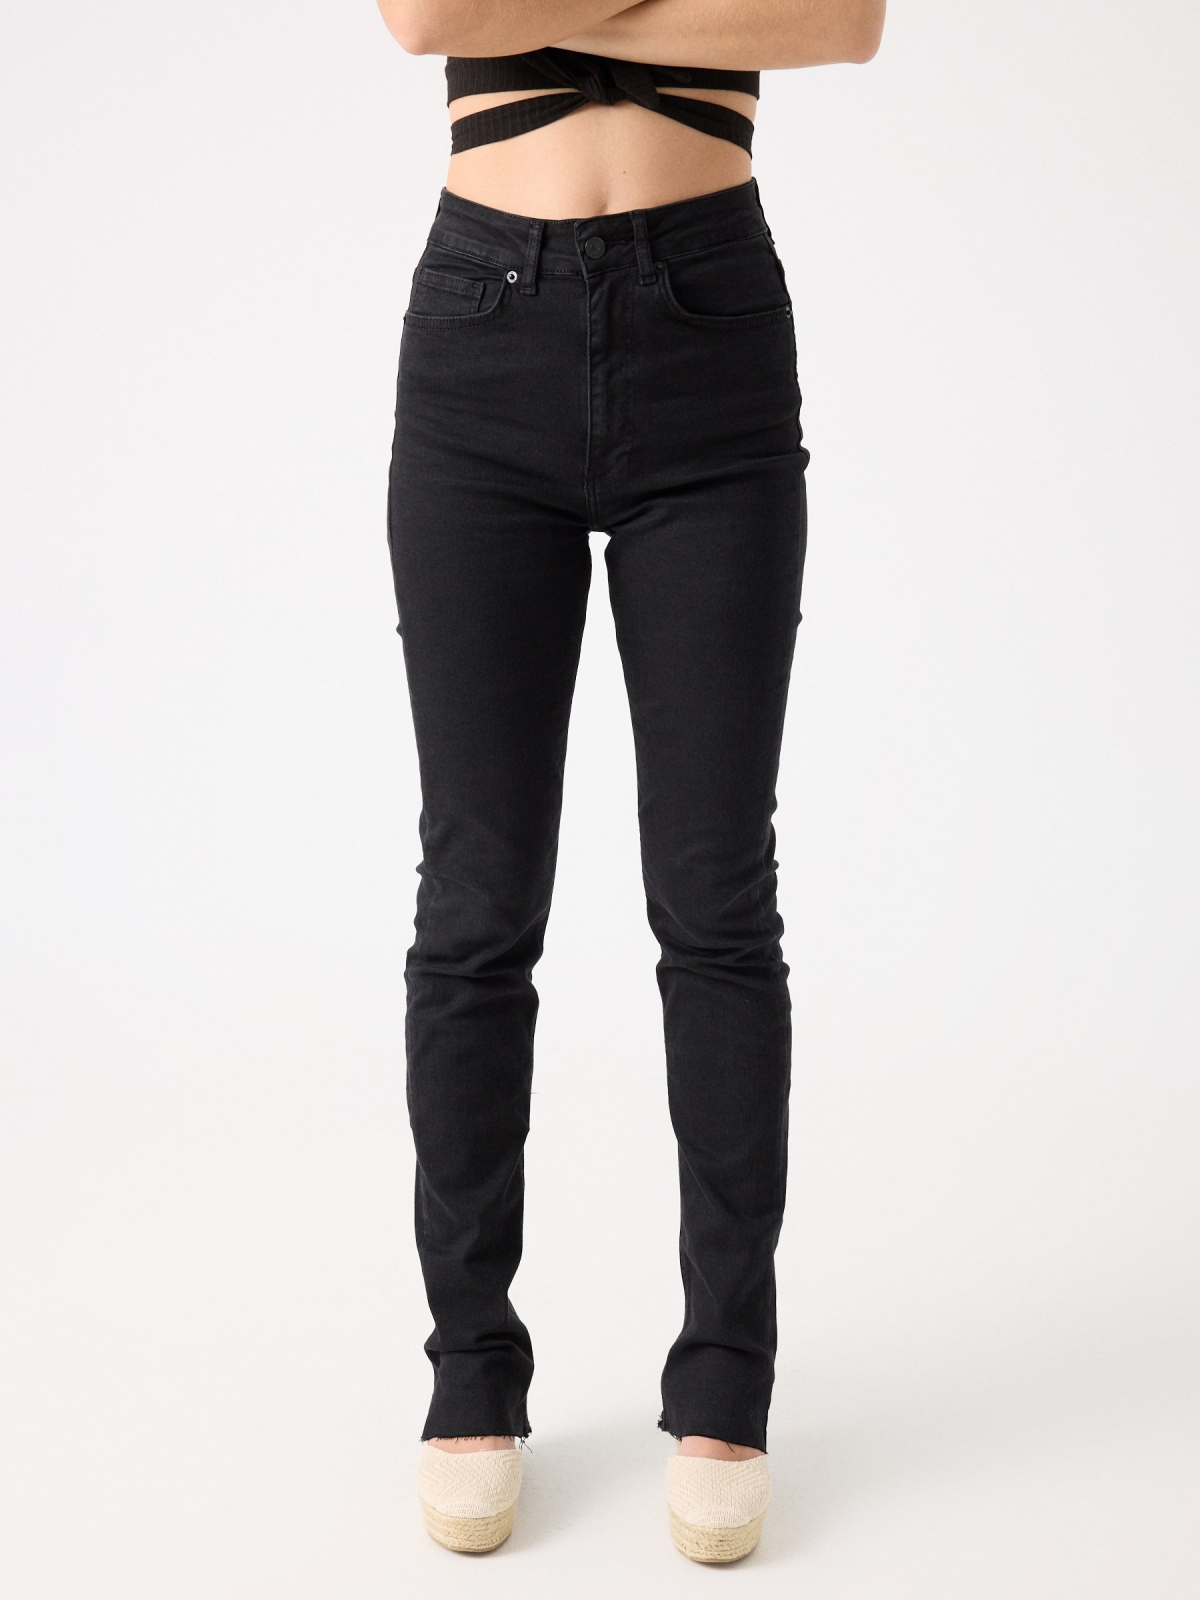 Jeans flare preto cintura alta preto vista geral frontal